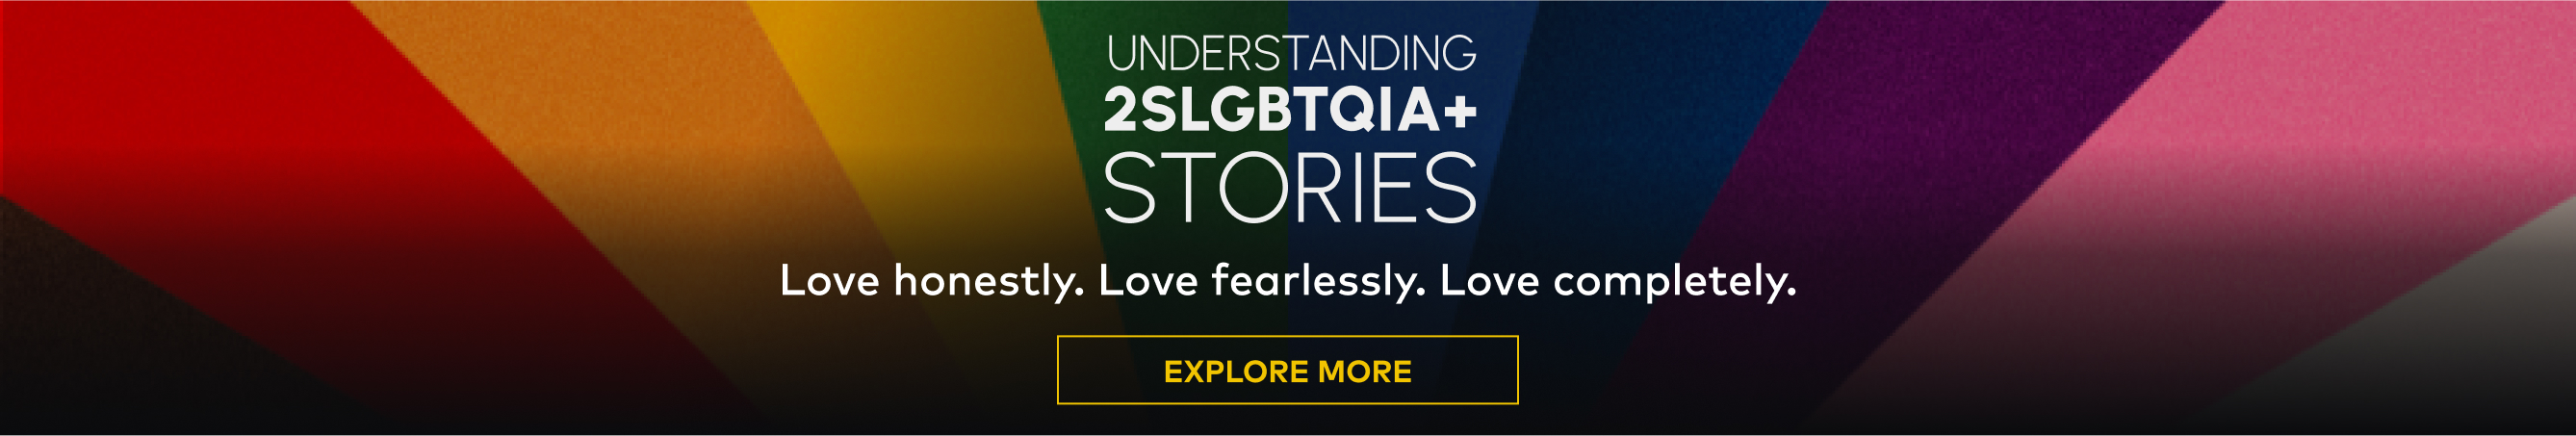 Understanding 2SLGBTQIA+ Stories